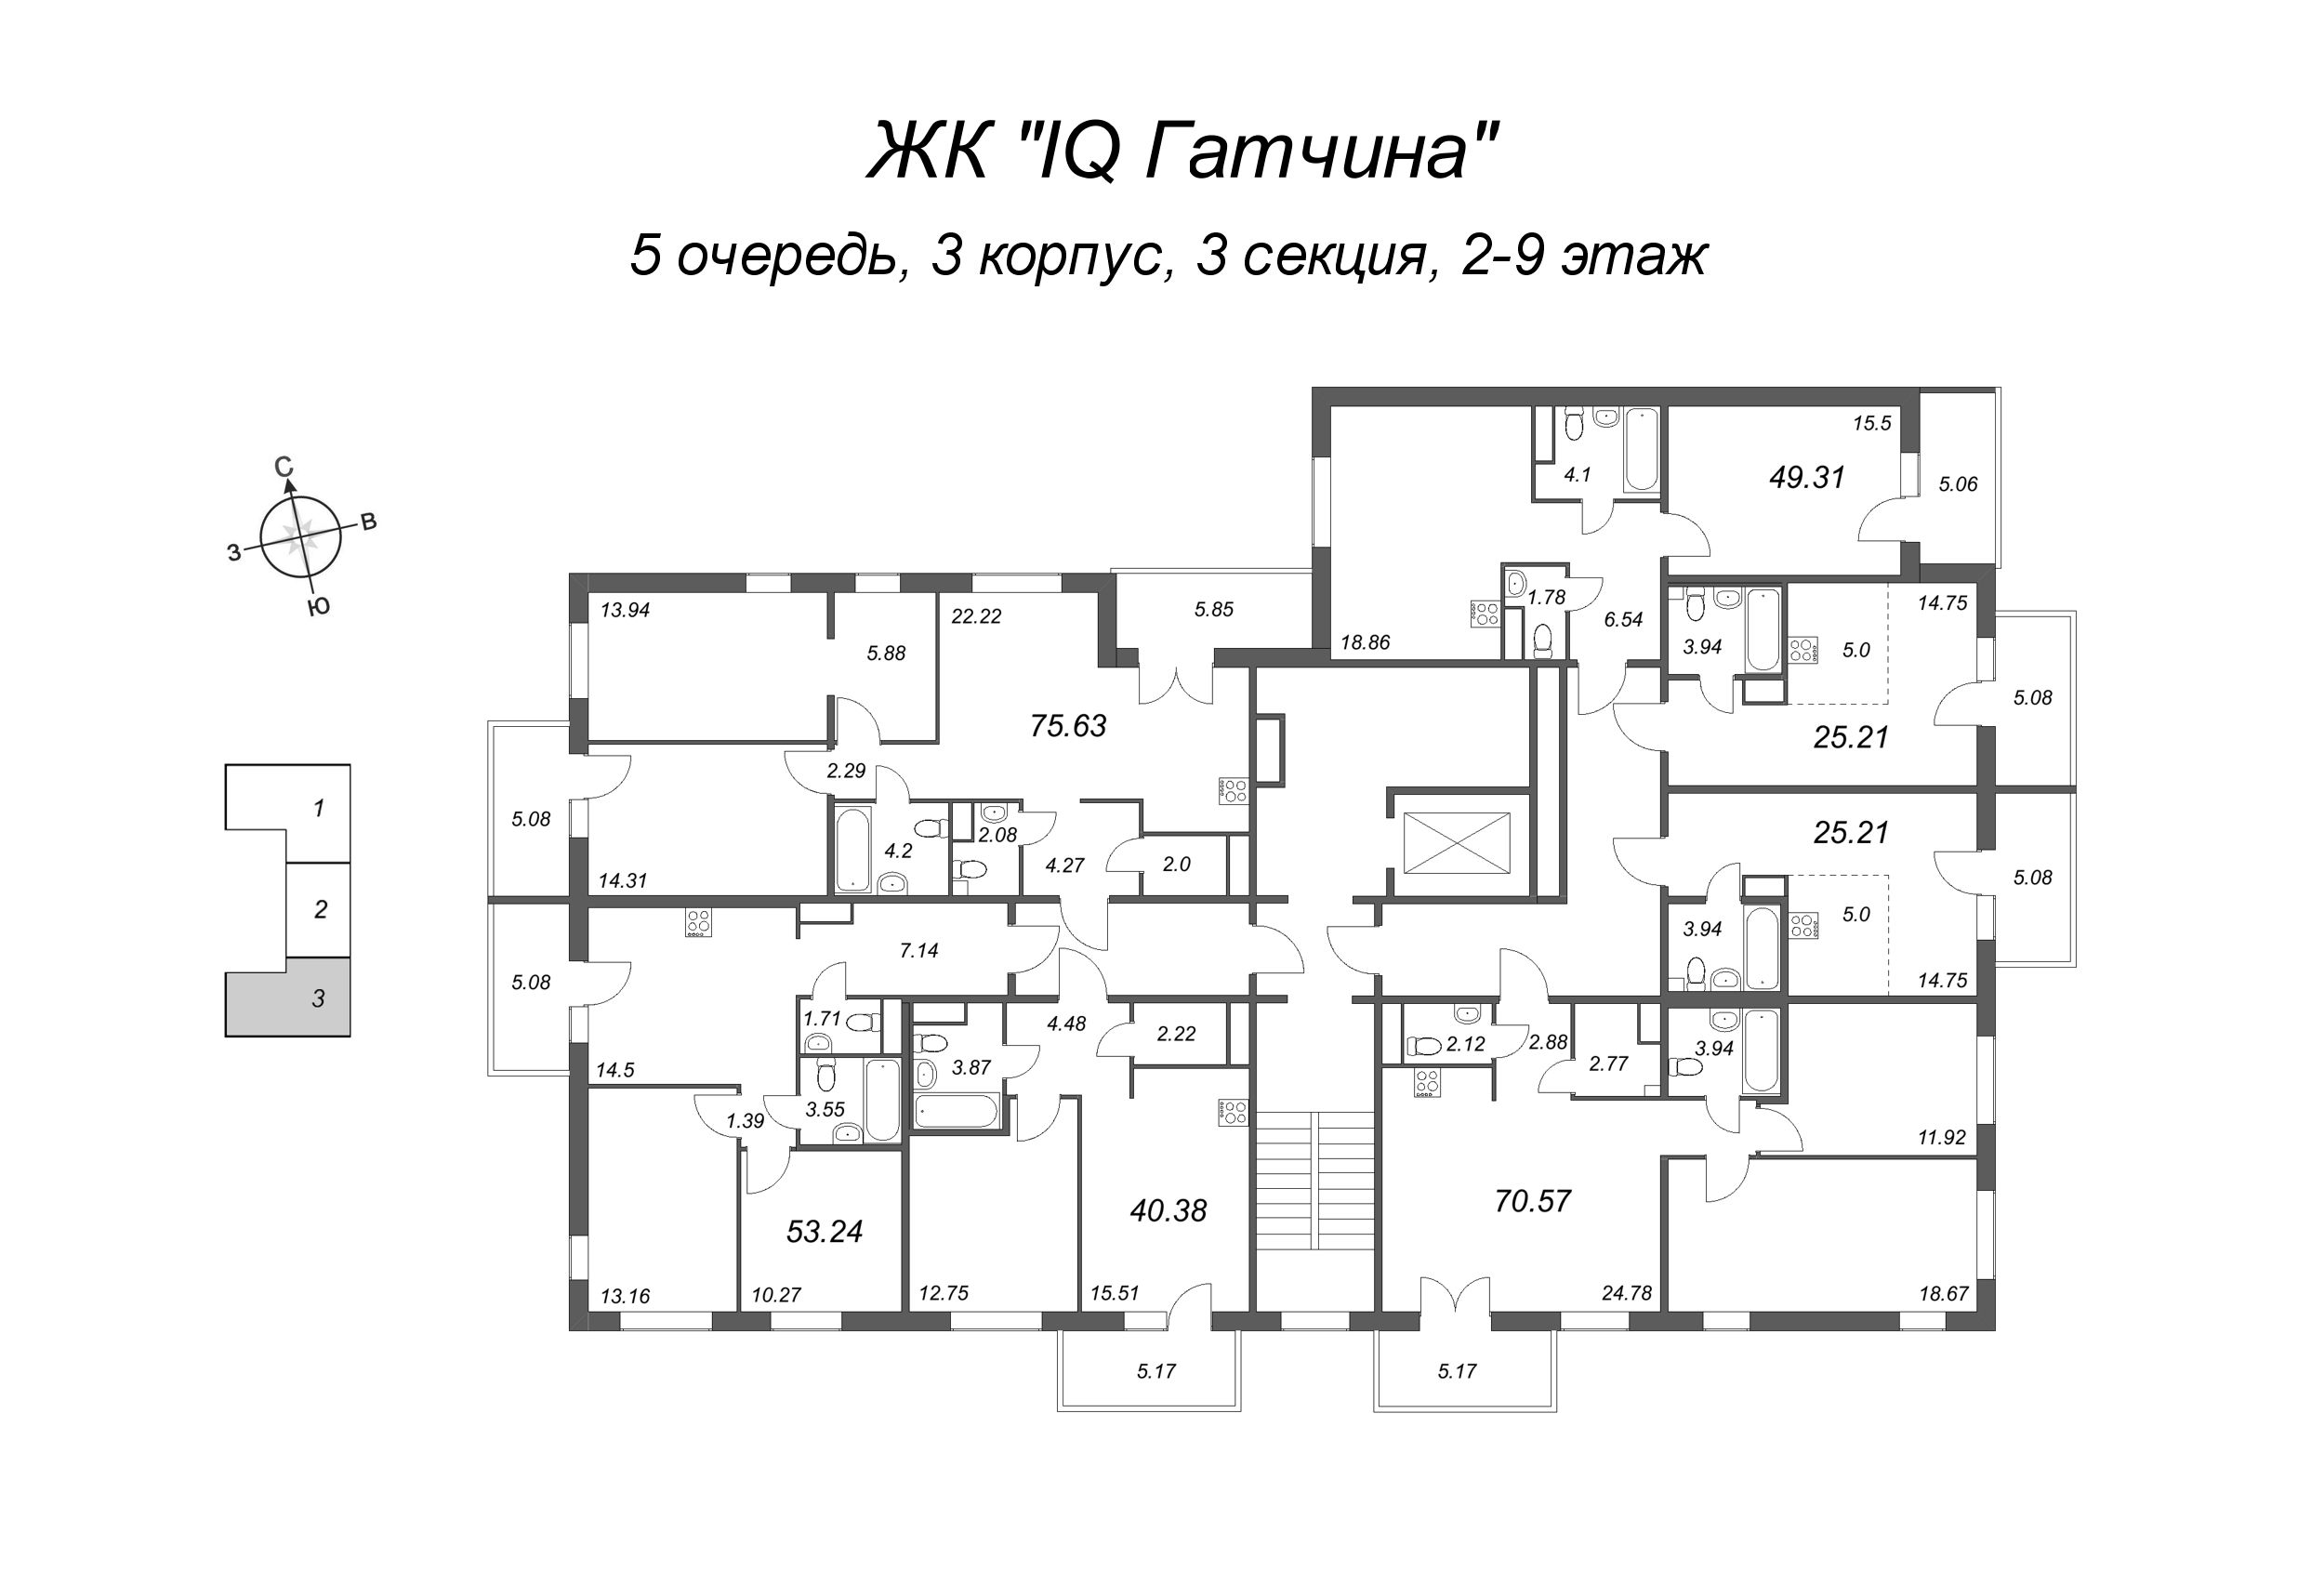 4-комнатная (Евро) квартира, 75.93 м² - планировка этажа